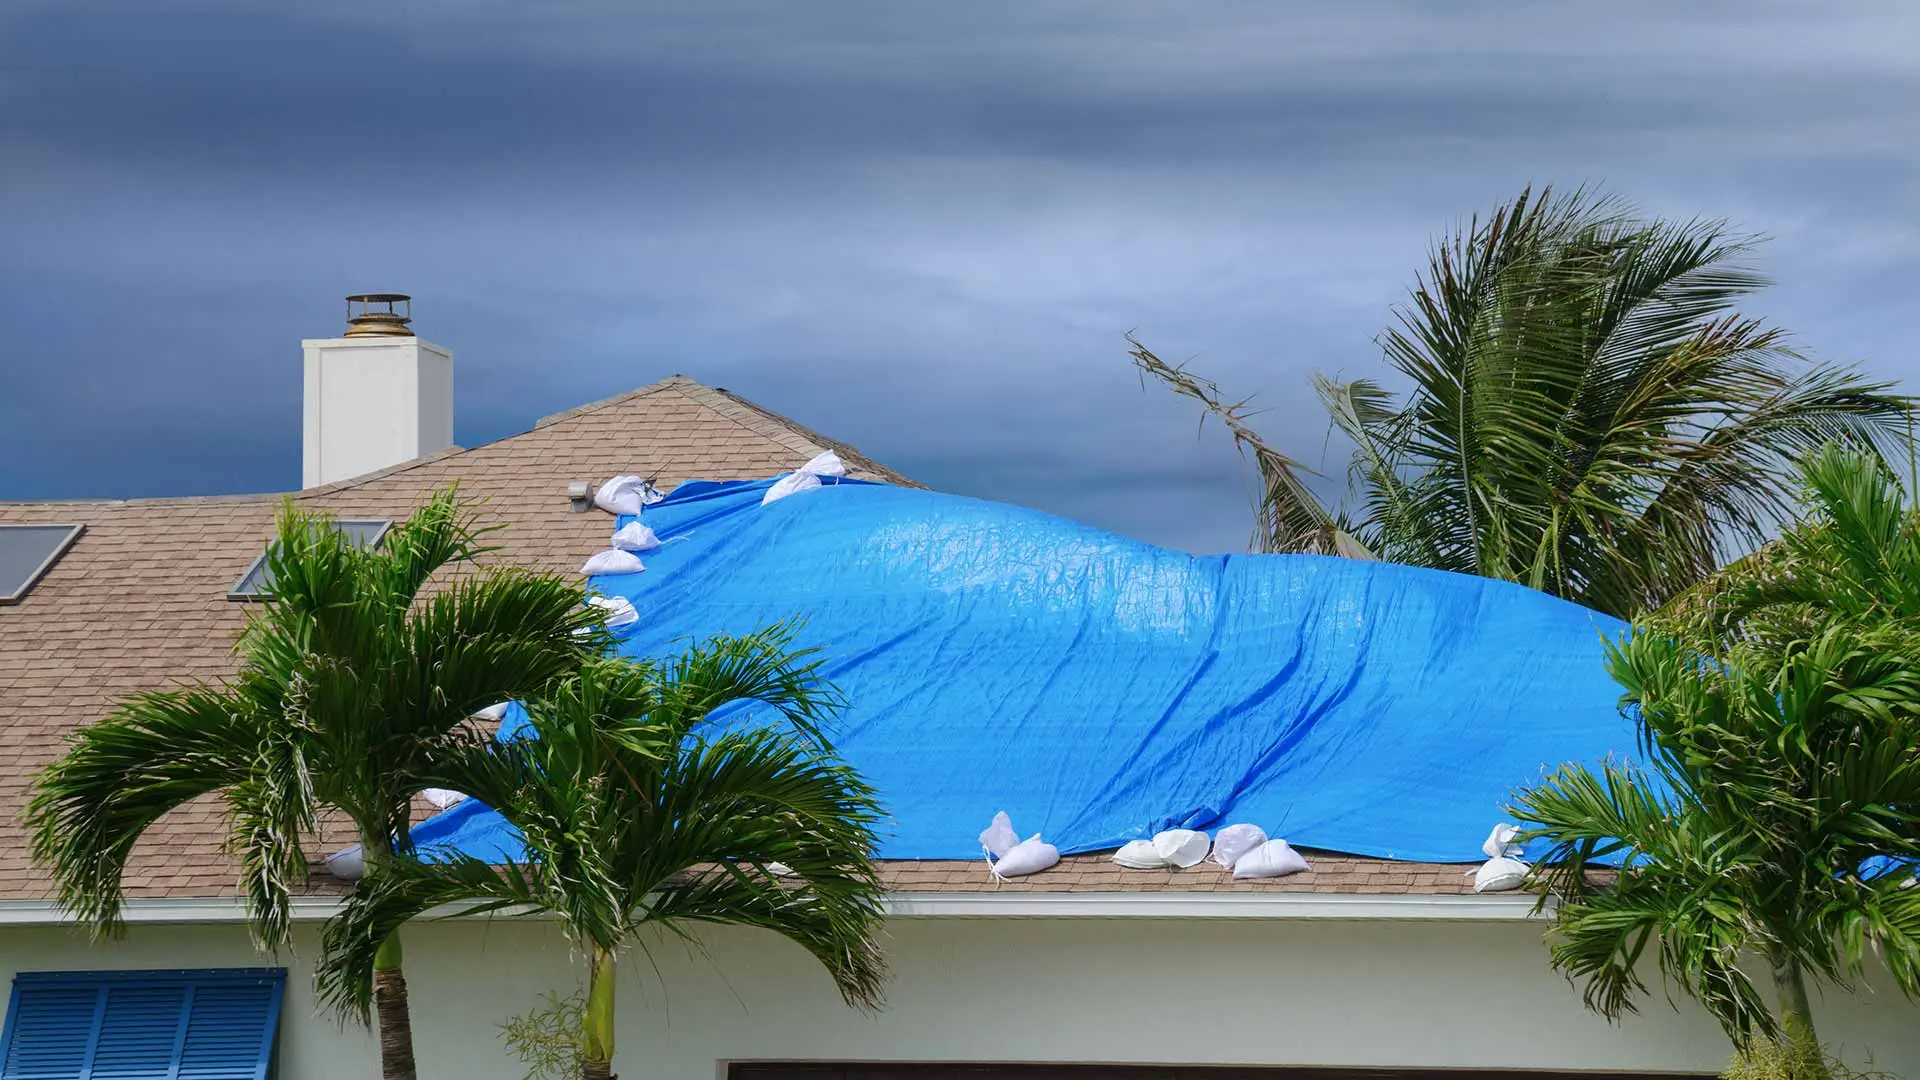 You'll Need More Than An Umbrella To Keep Dry In Florida's Rainy Season